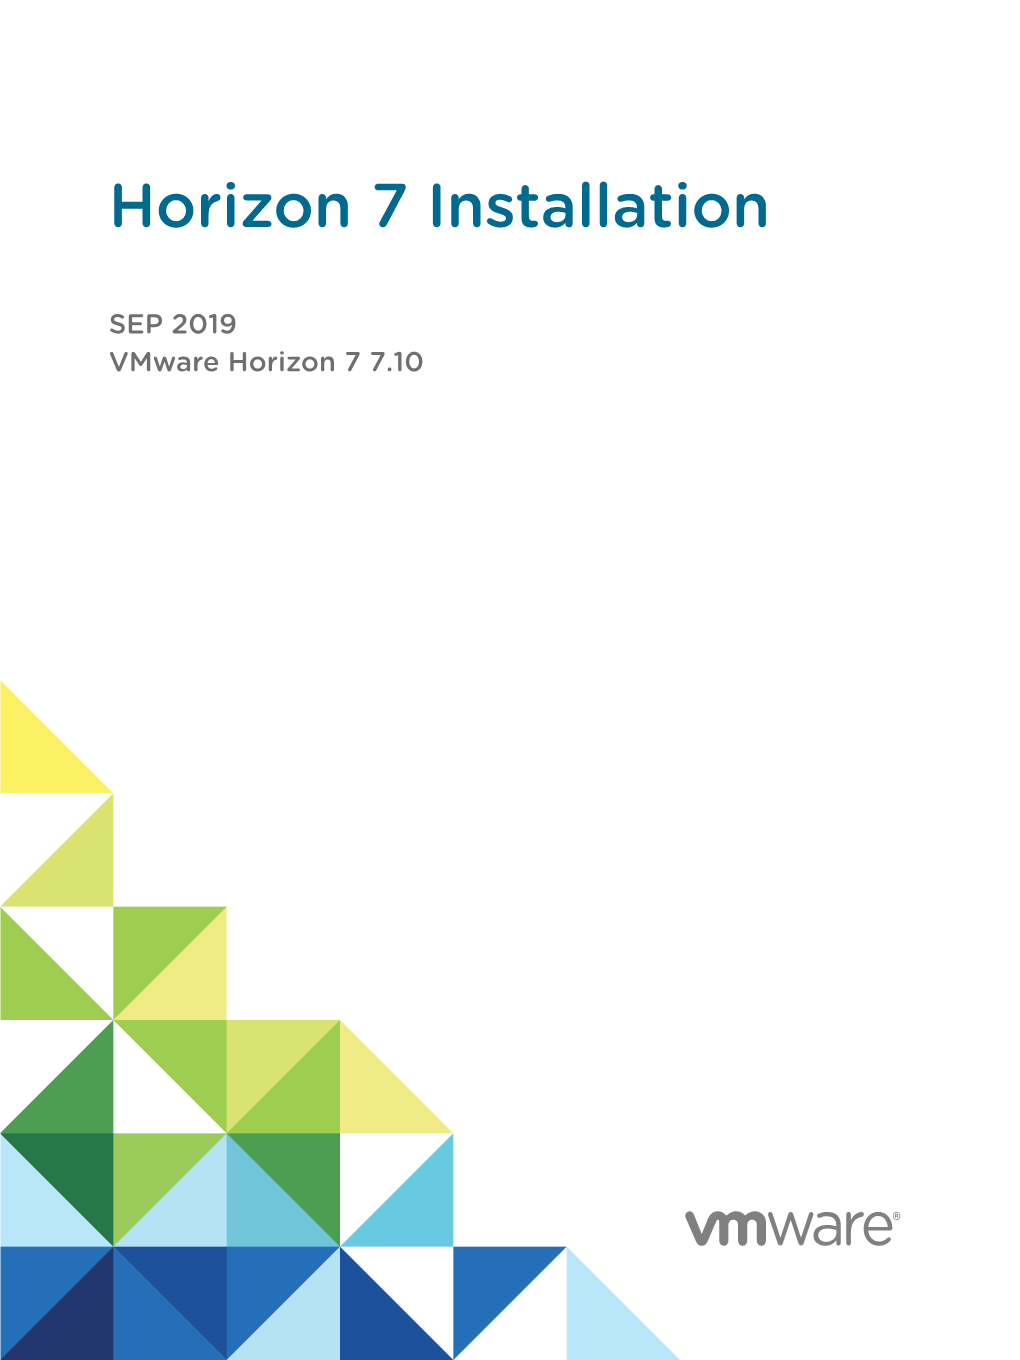 Vmware Horizon 7 7.10 Horizon 7 Installation